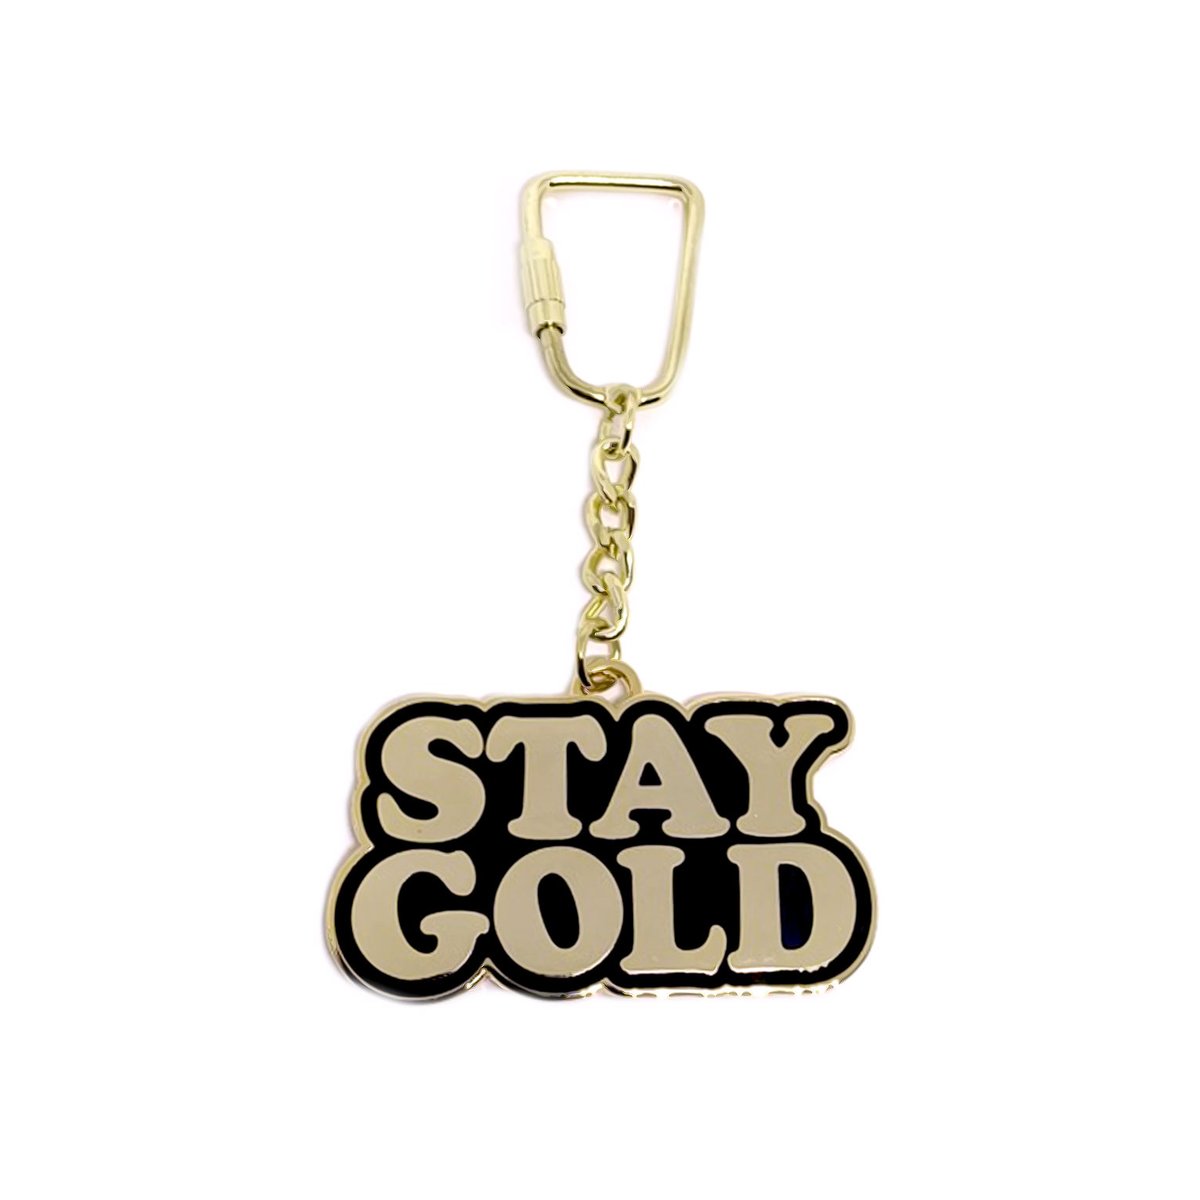 Stay Gold Keychain.